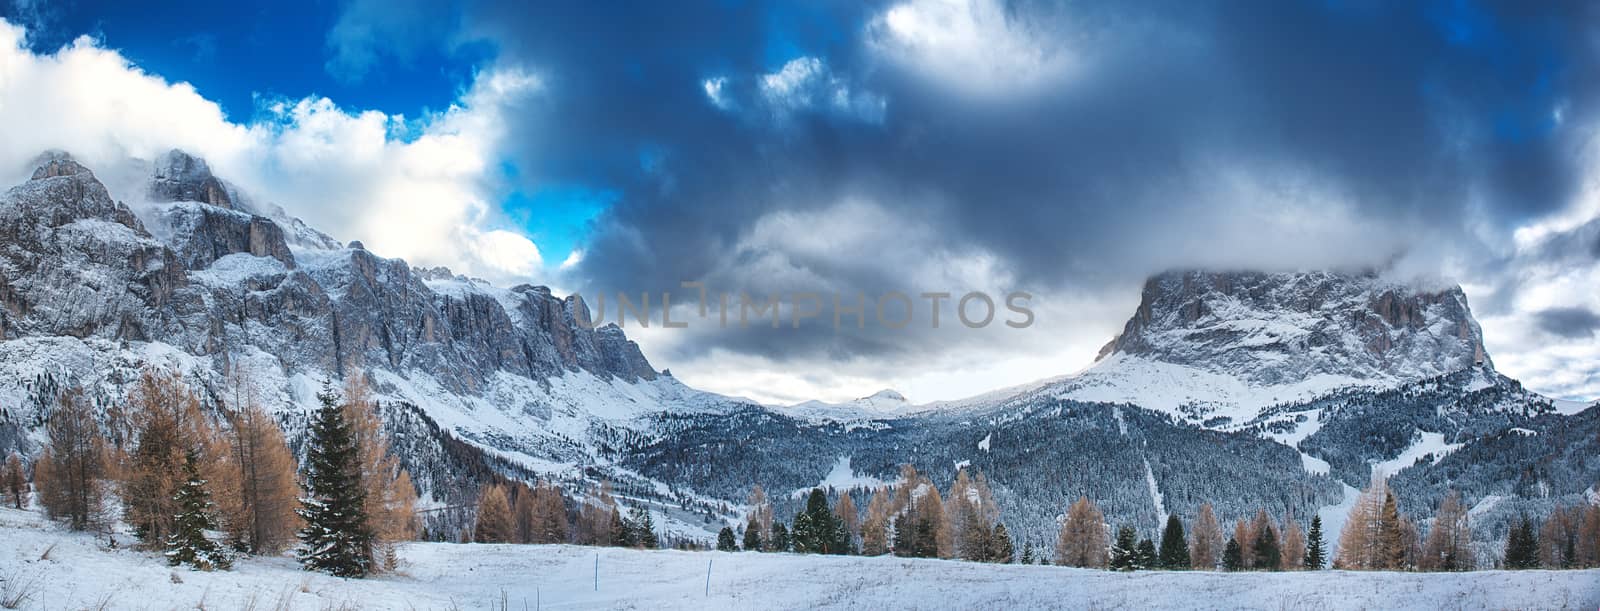 Winter on the Dolomiti of Alta Badia by Mdc1970